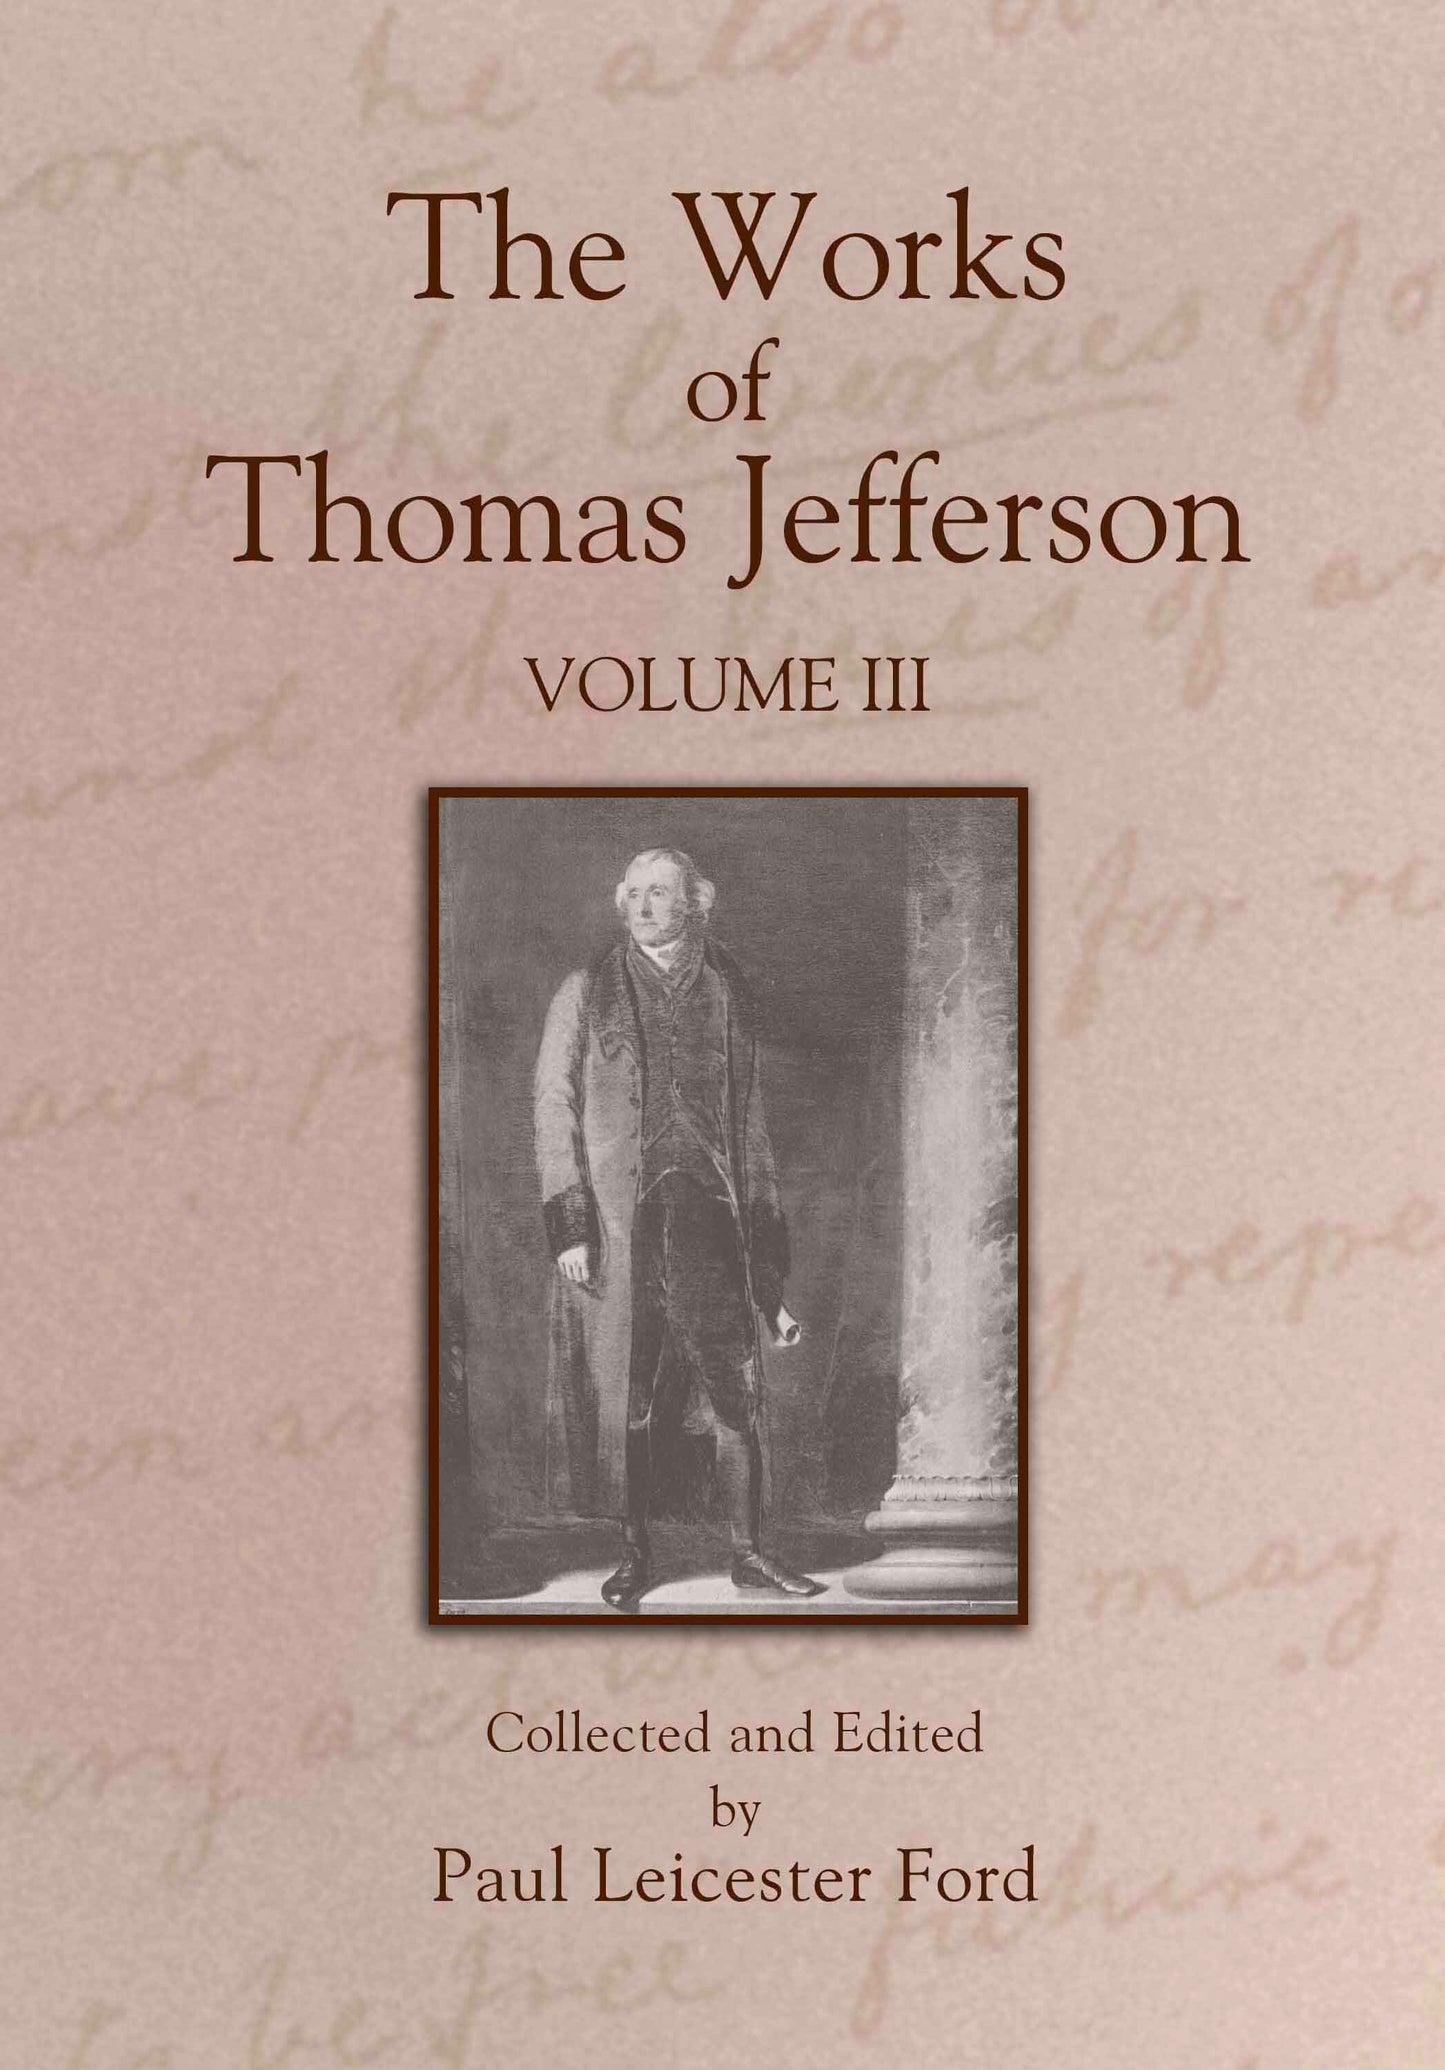 The Works of Thomas Jefferson: Volume III